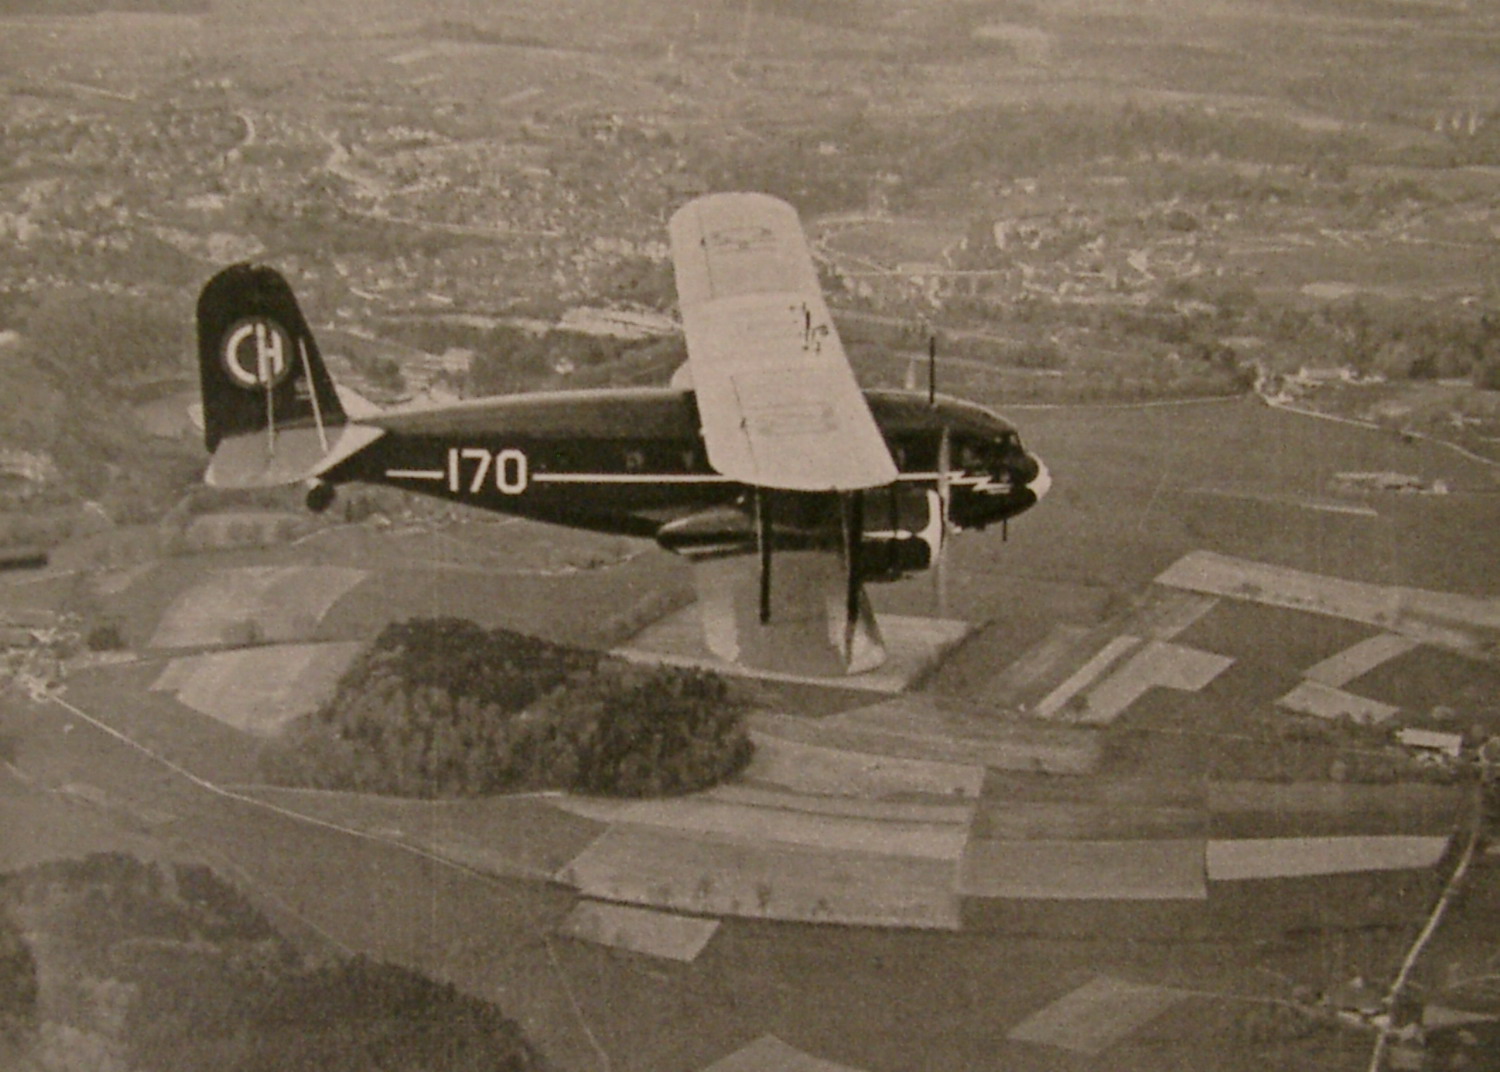 Swissair Curtiss AT-32C Condor II, CH-170, in flight.